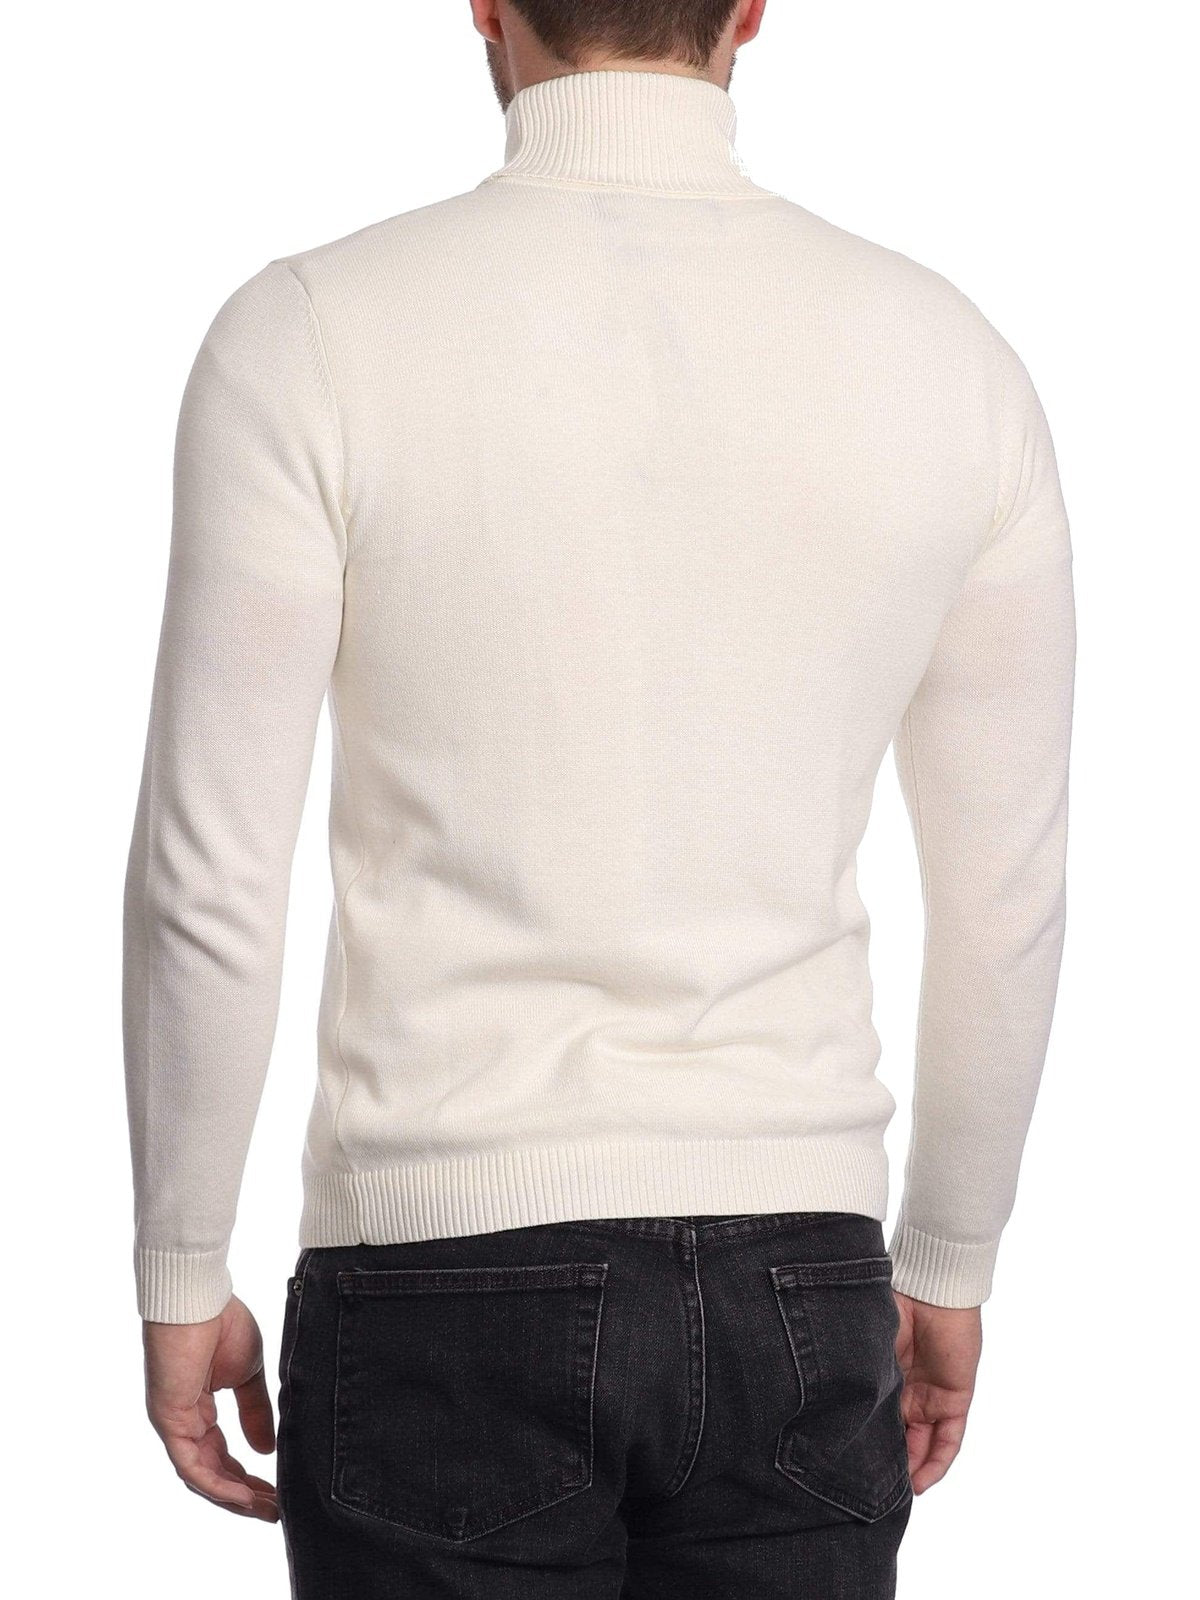 Arthur Black SWEATERS Arthur Black Men's Solid Cream Pullover Cotton Blend Turtleneck Sweater Shirt